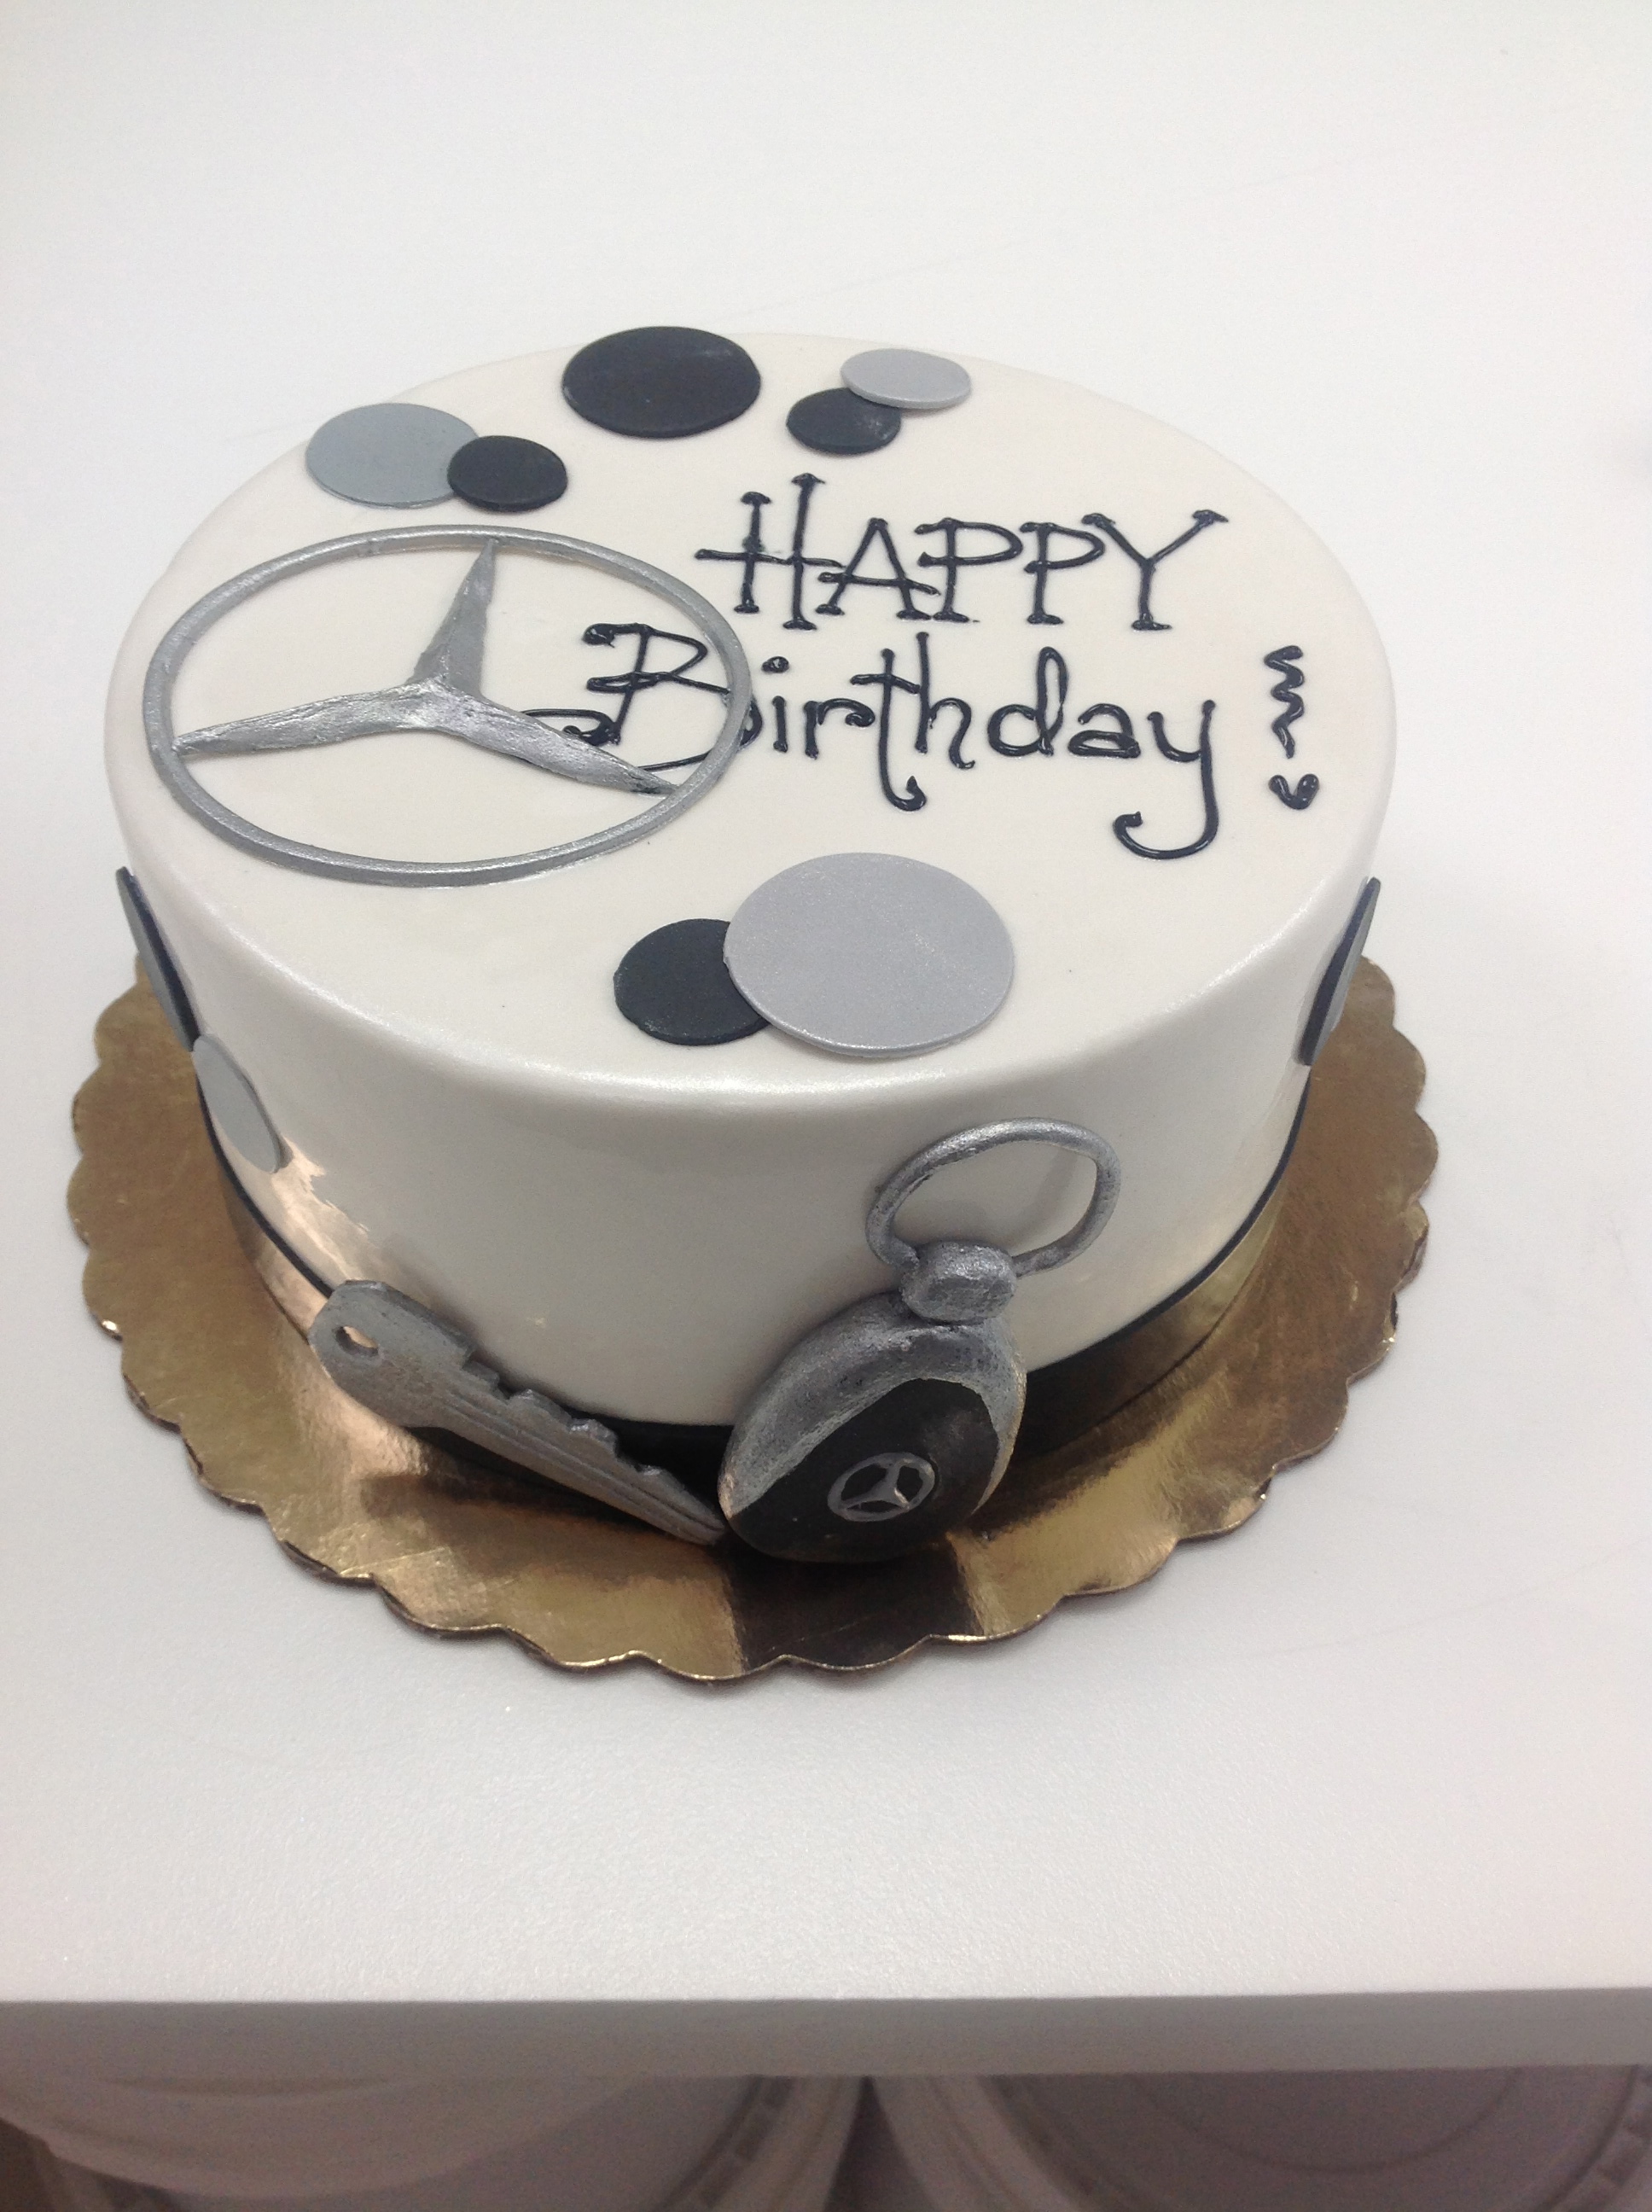 Formula 1 Racing Car Cake | F1 Cake | F1 Mercedes Cake – Liliyum Patisserie  & Cafe